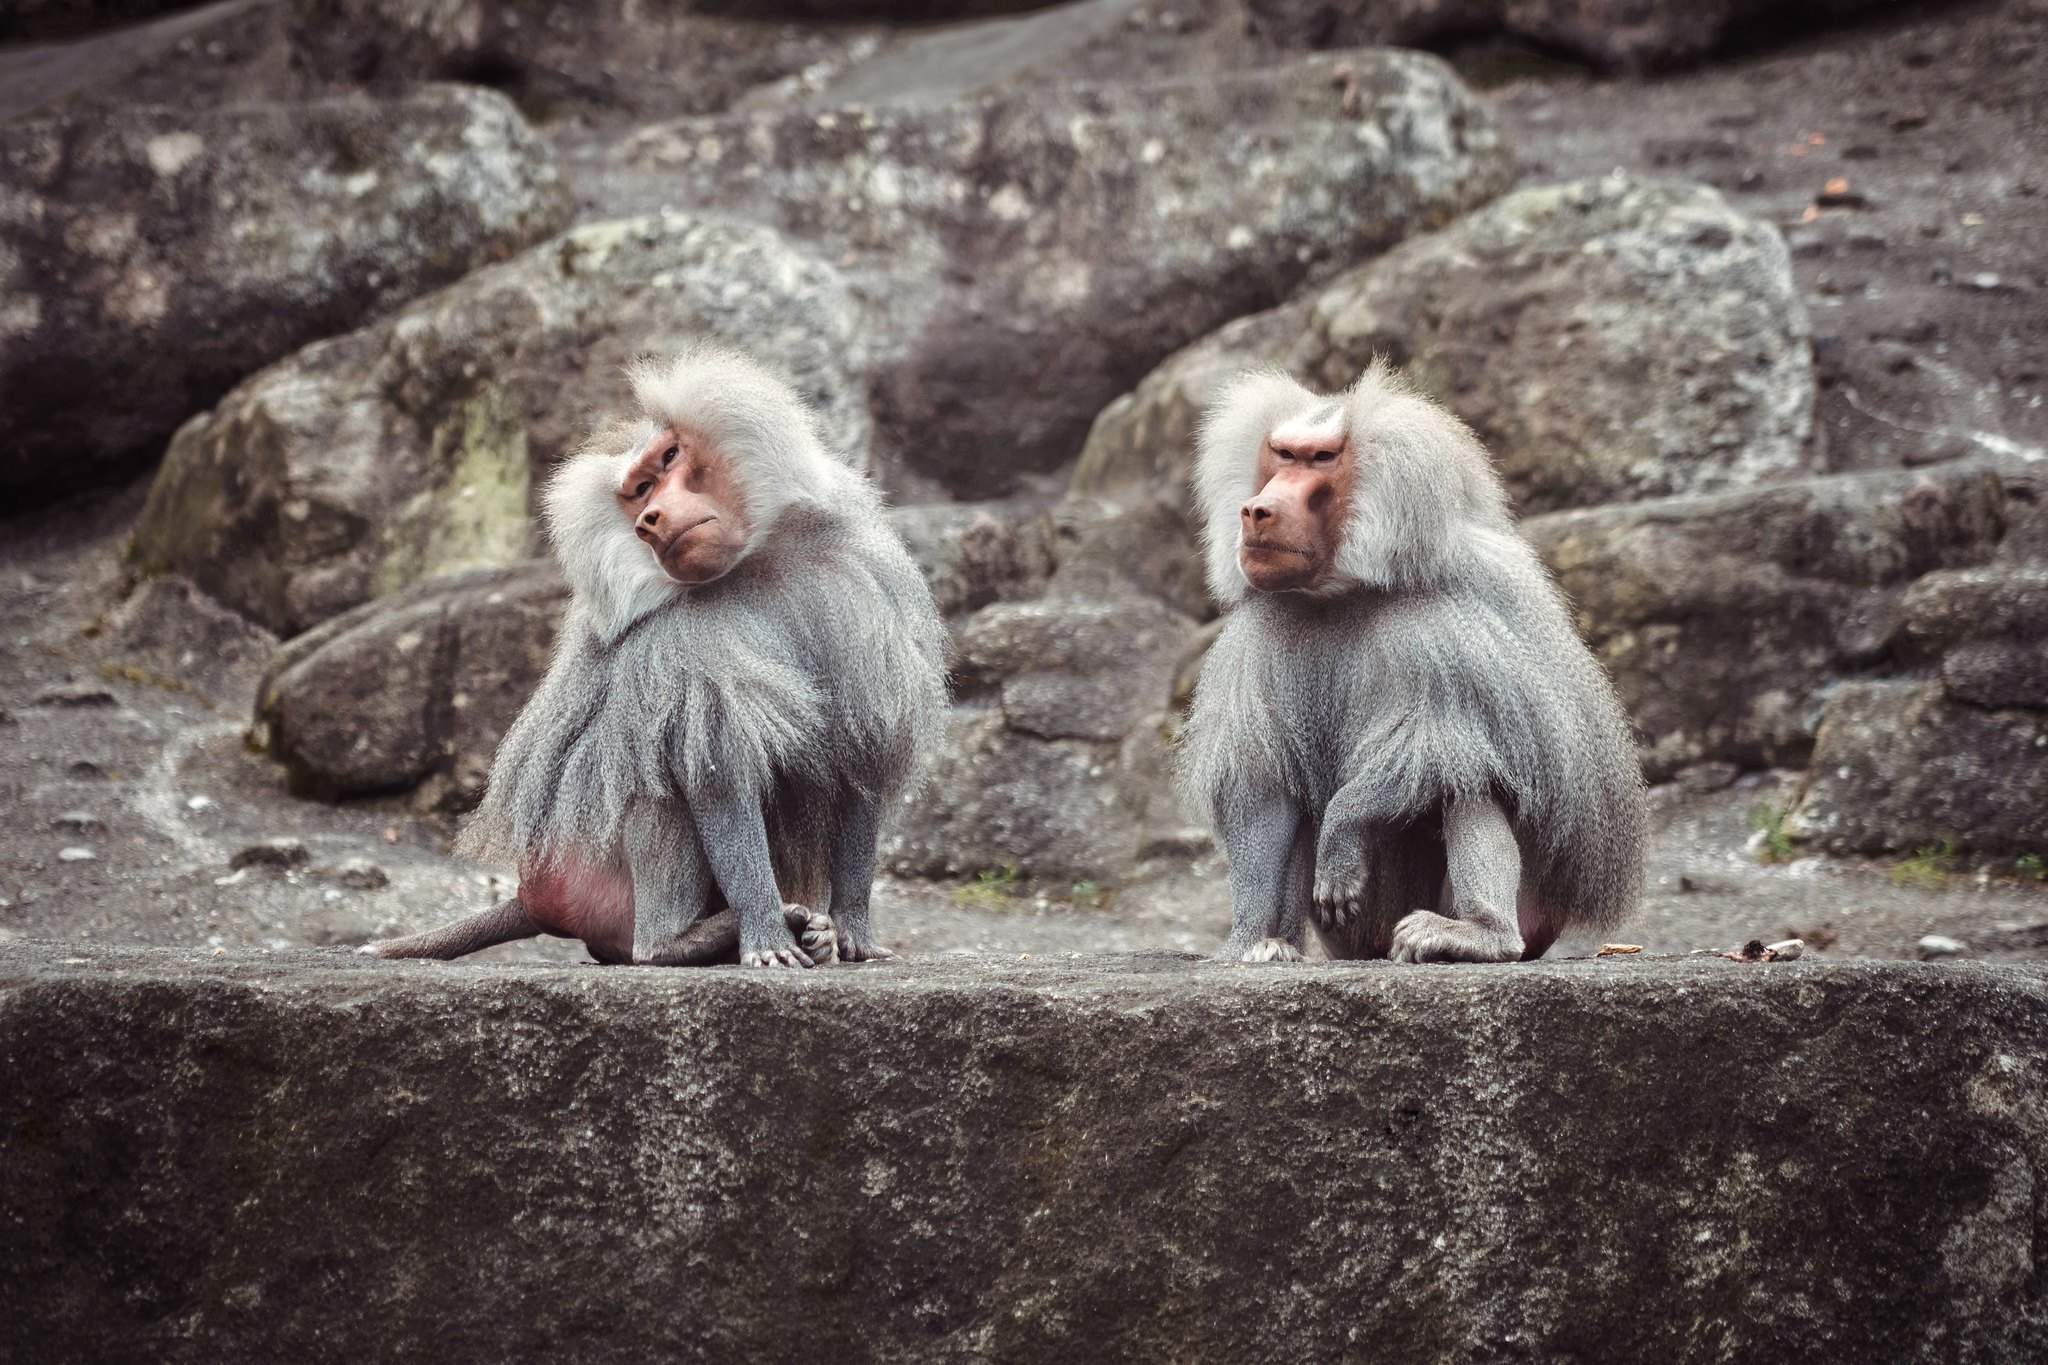 Hamadryas baboons of the Hellabrunn Zoo